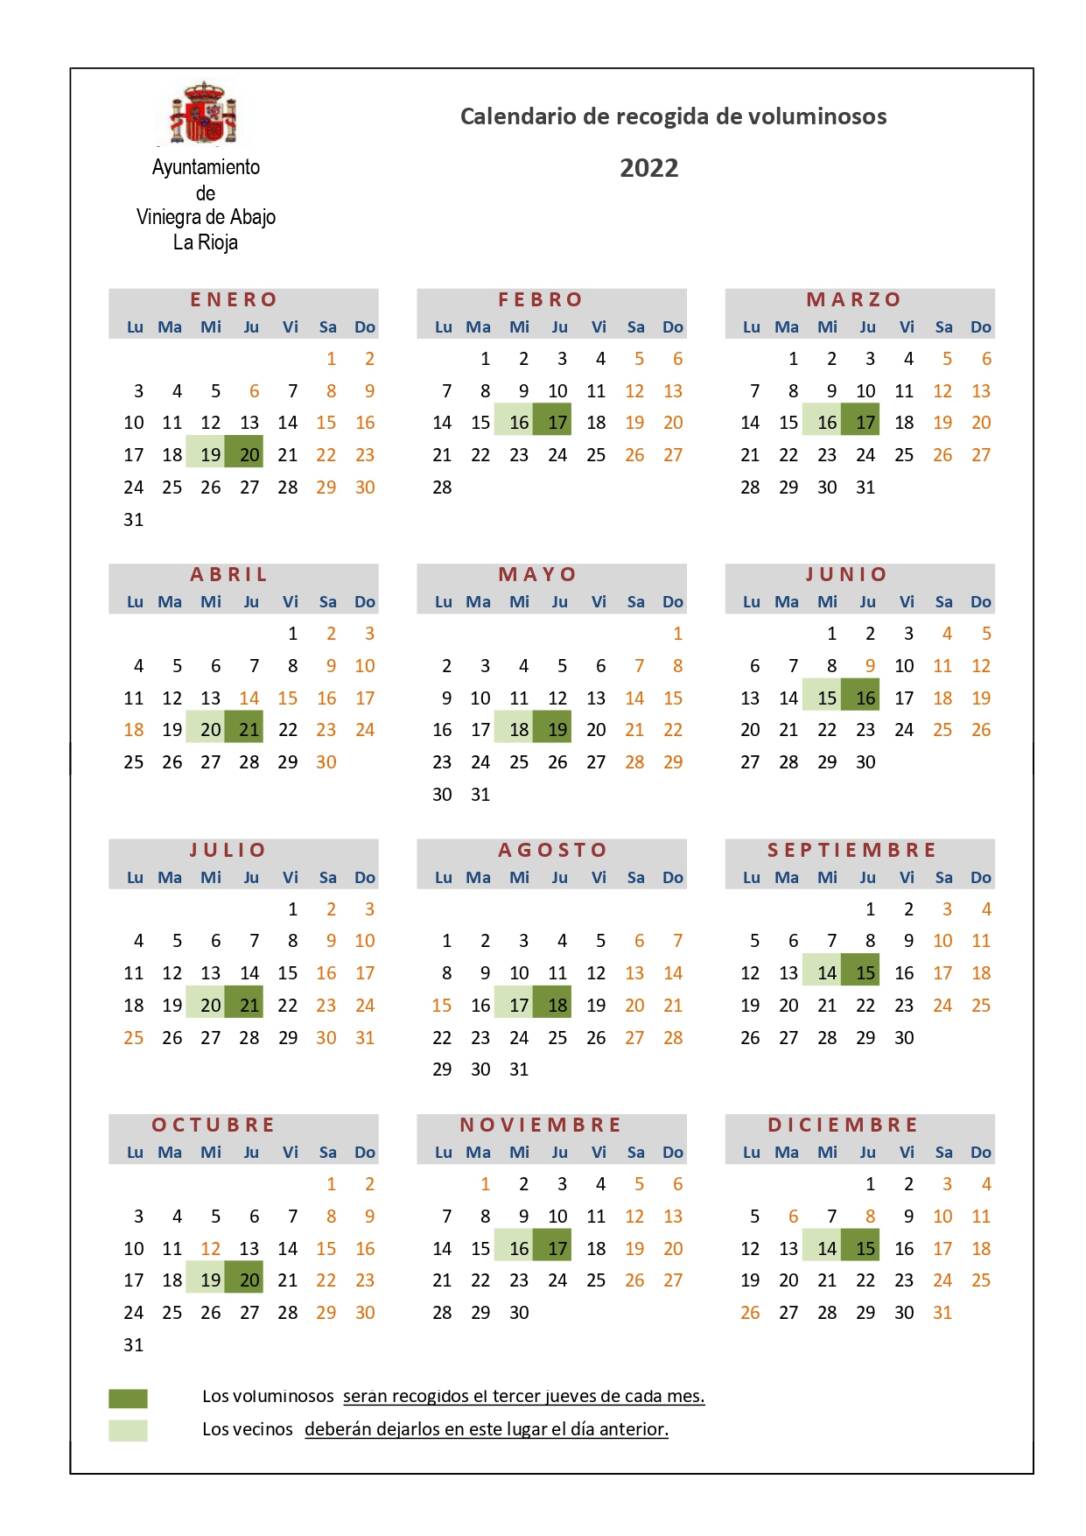 Calendario Voluminosos 2022 Page 0001